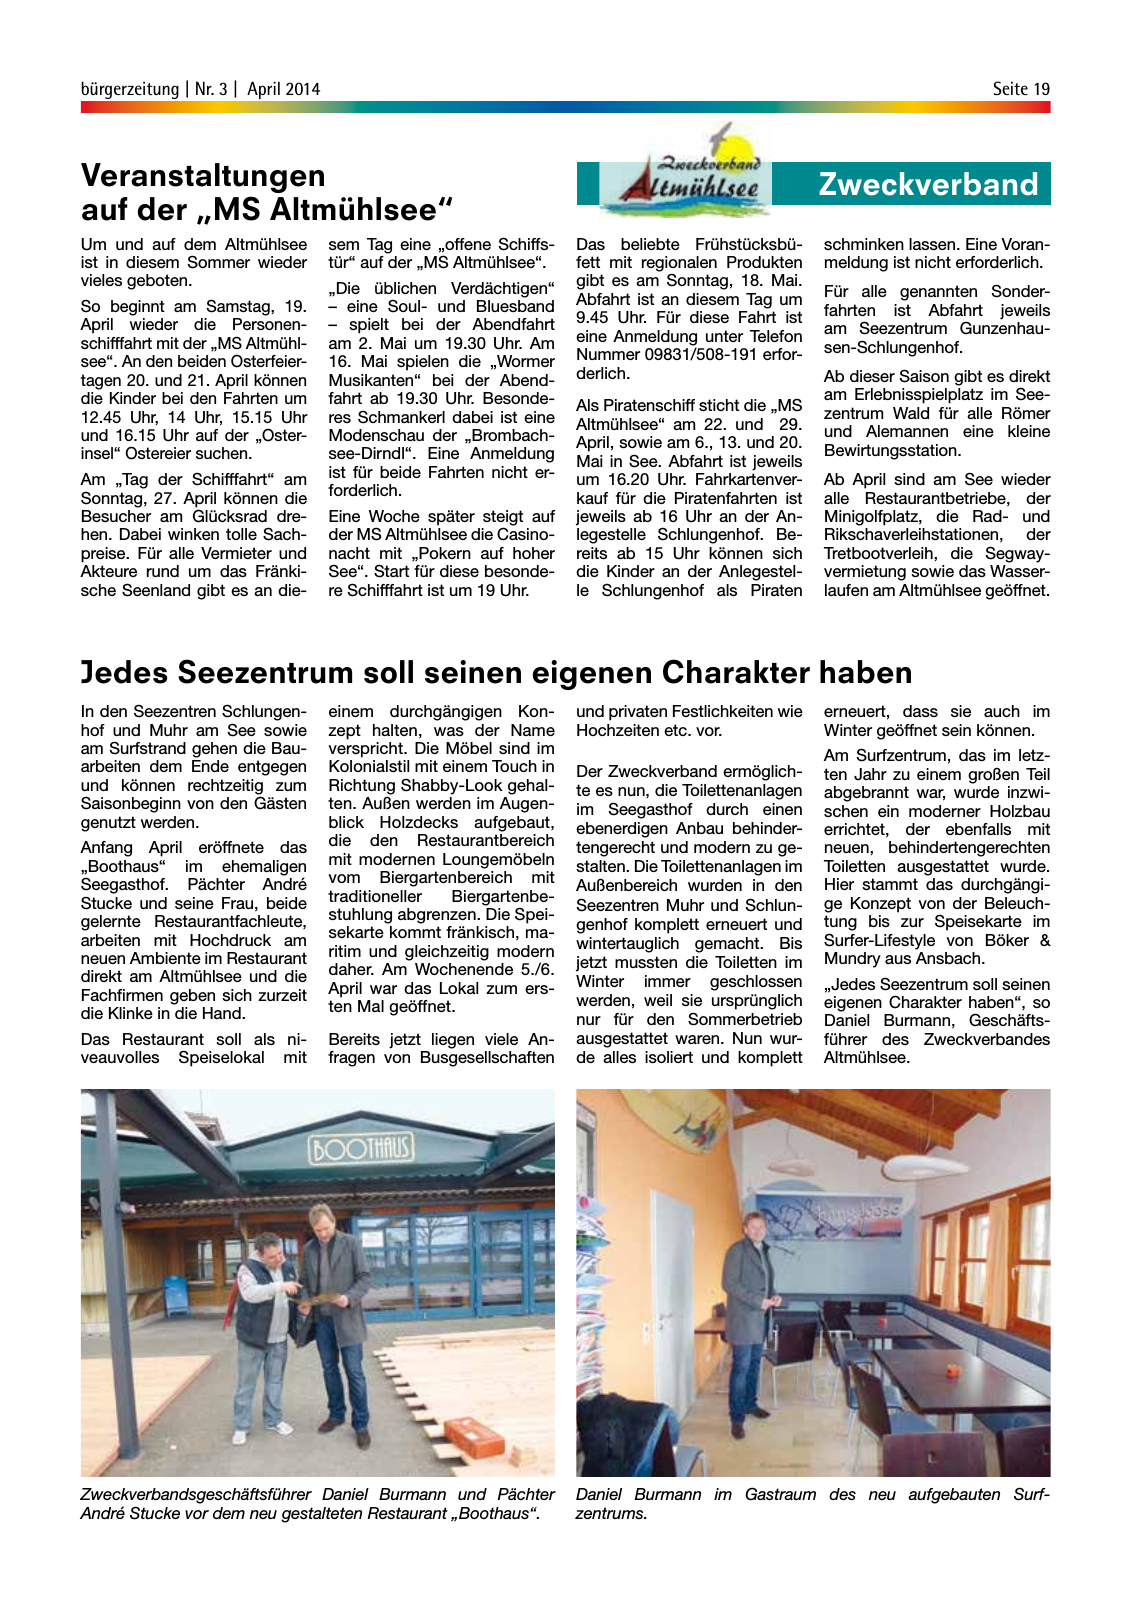 Vorschau StadtLandGUN Gunzenhäuser Bürgerzeitung Nr. 3 | April 2014 Seite 19